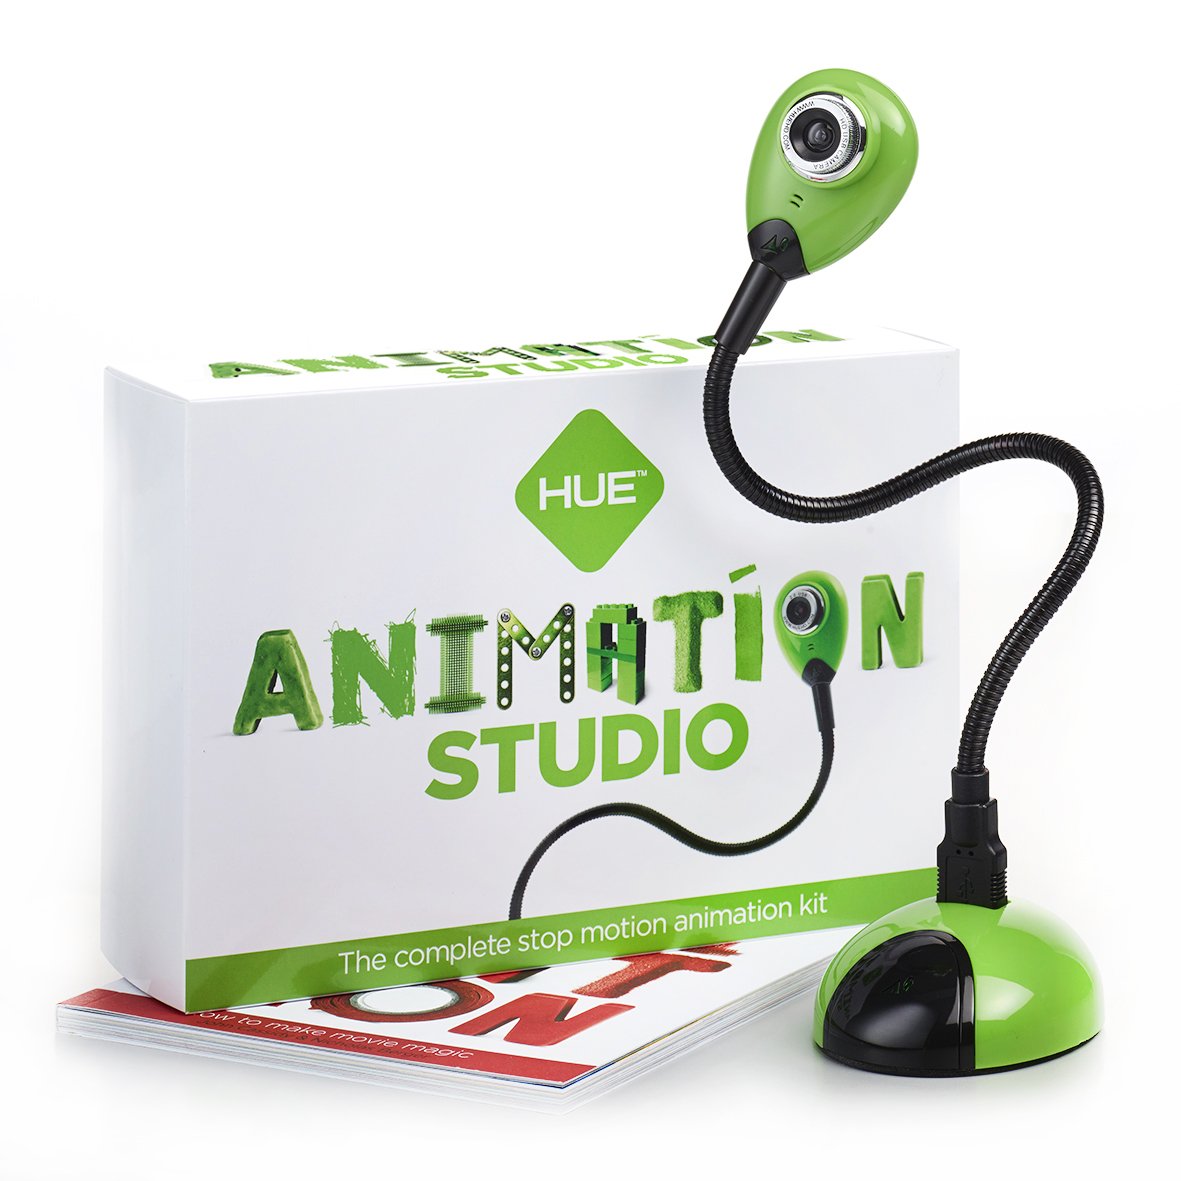 Hue Animation Studio product image